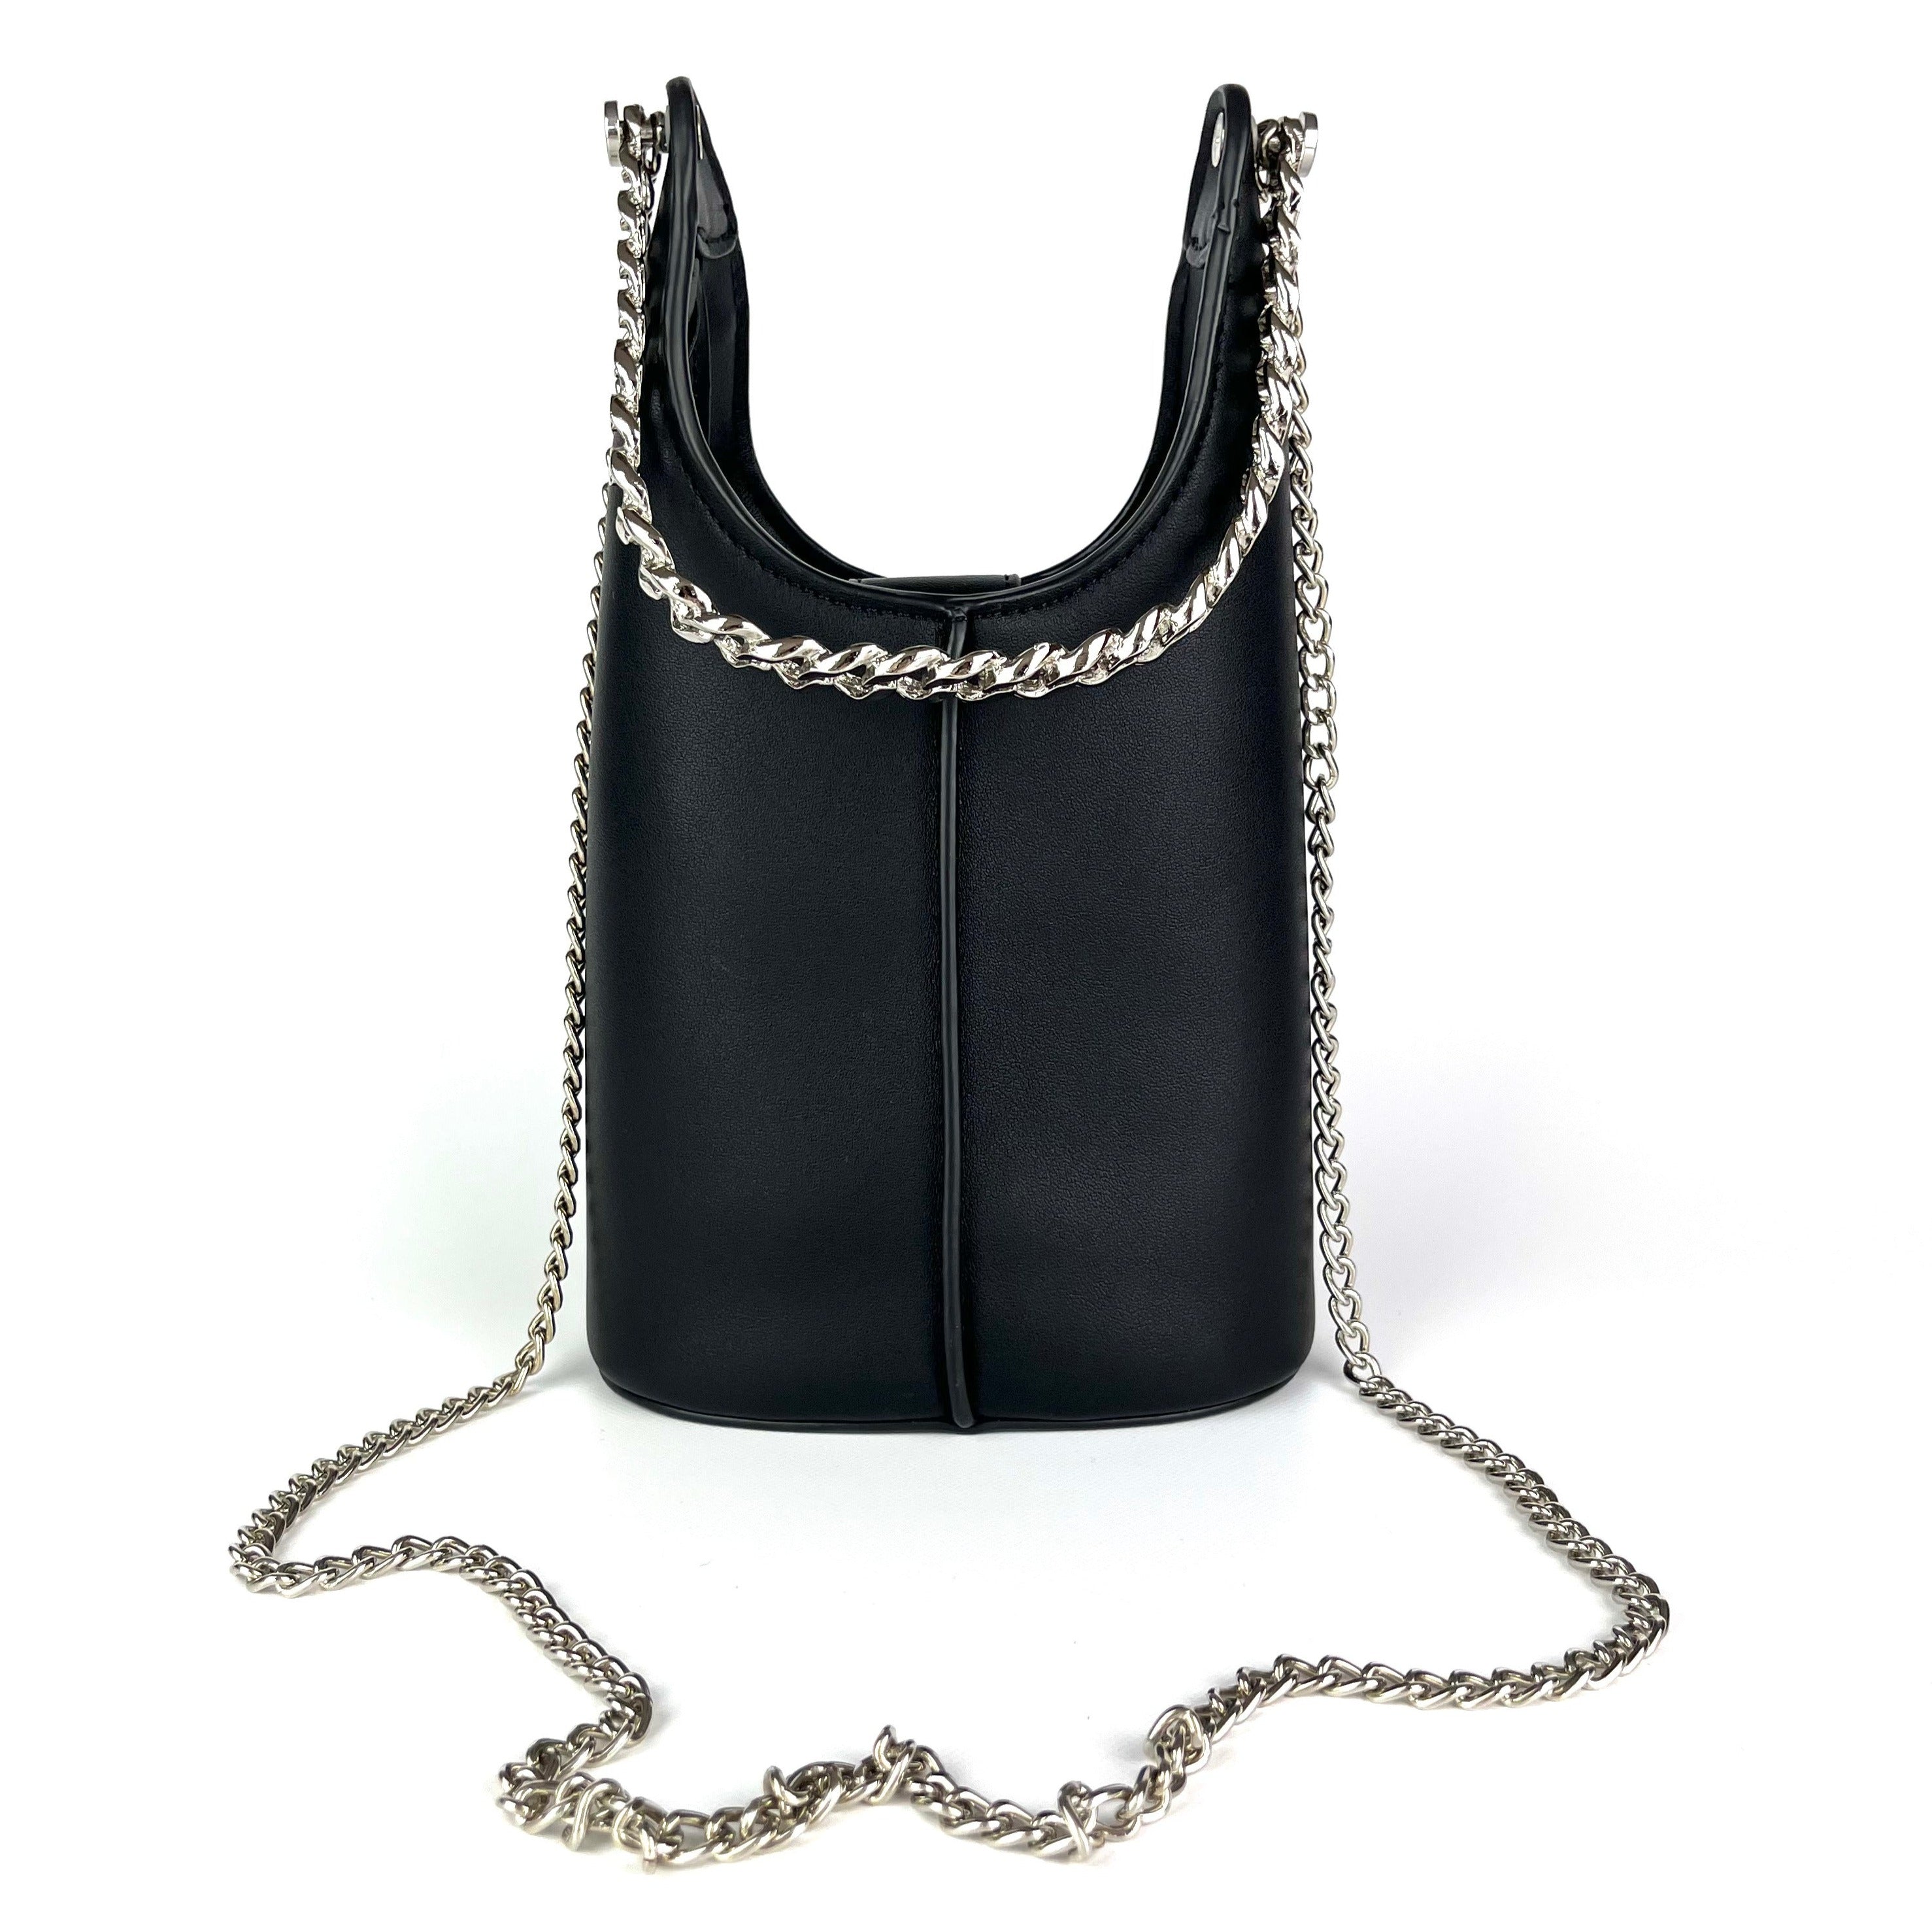 Seloah Chain shoulder bag